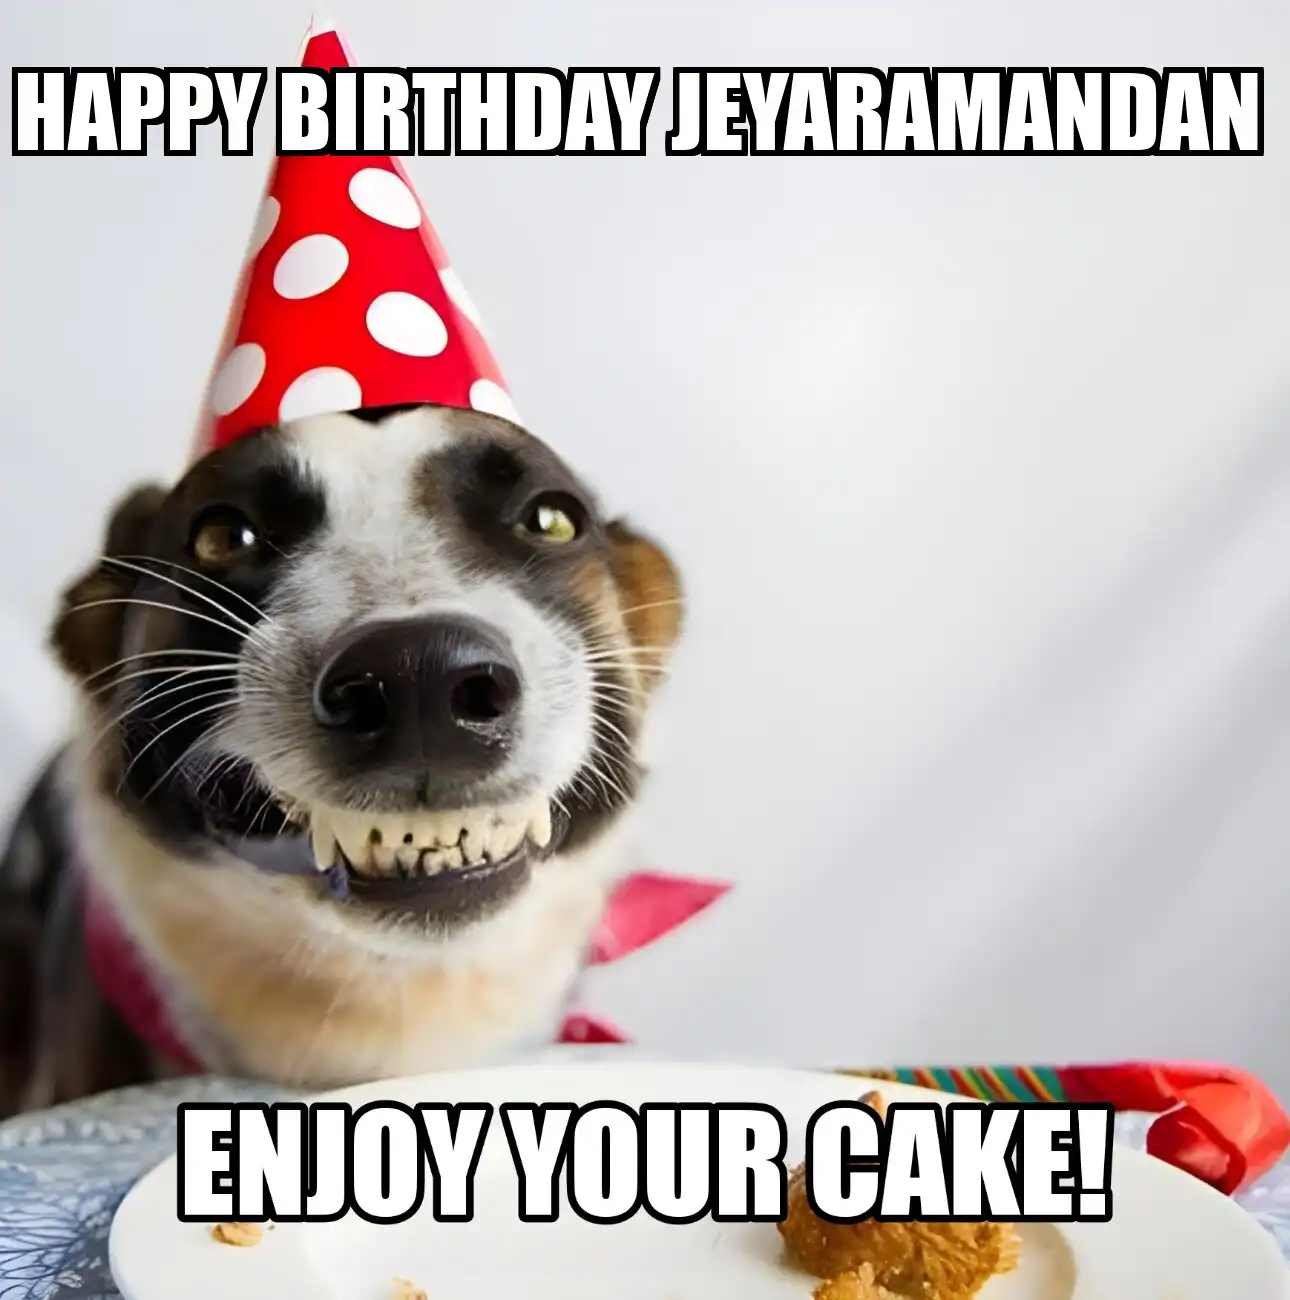 Happy Birthday Jeyaramandan Enjoy Your Cake Dog Meme